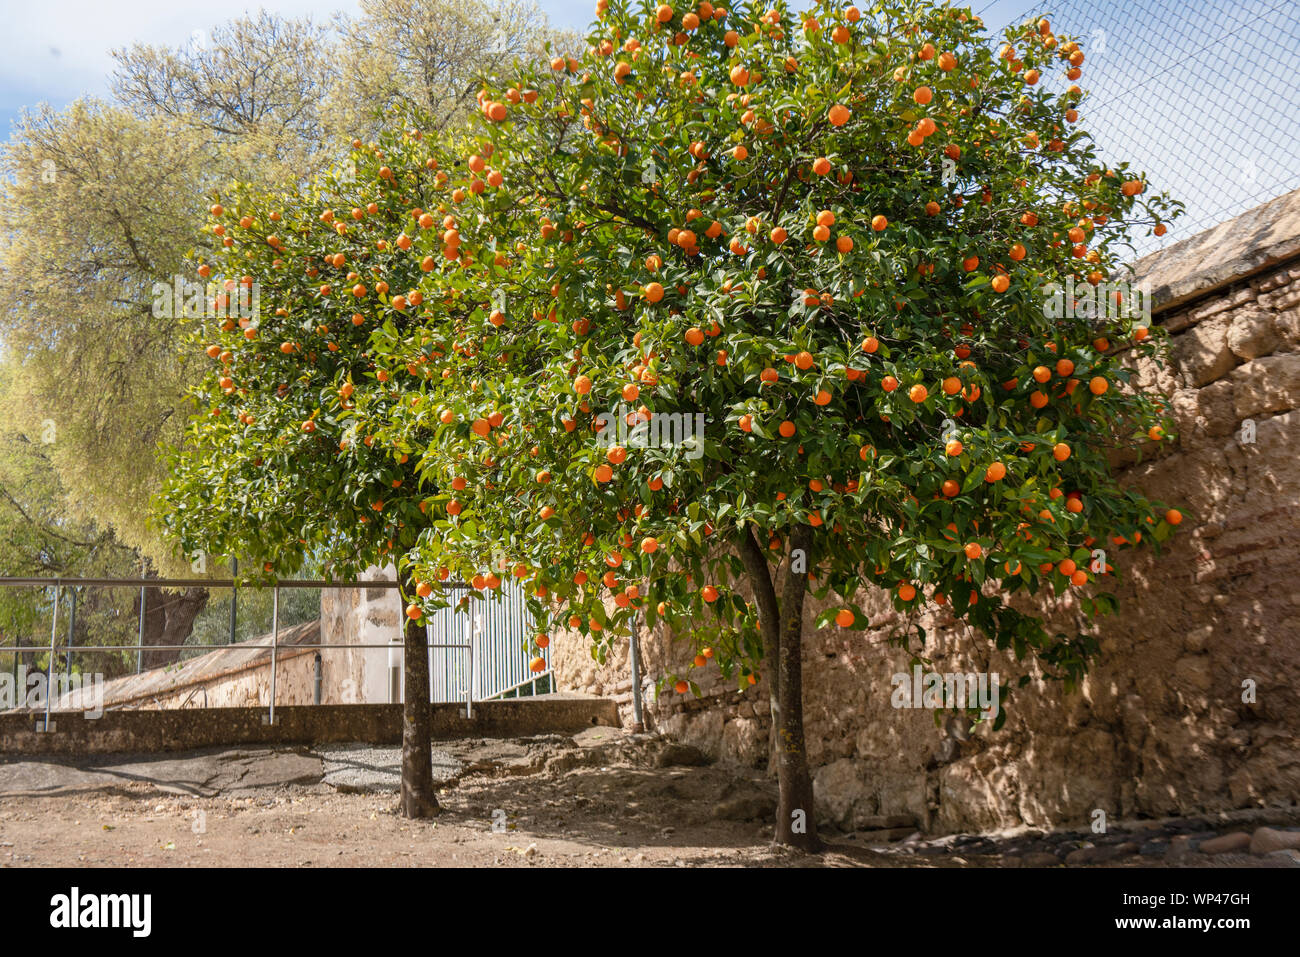 Seville orange trees, laden with fruit in Medina Azahara, Cordoba, Spain, classic rounded shape against a stone wall Stock Photo